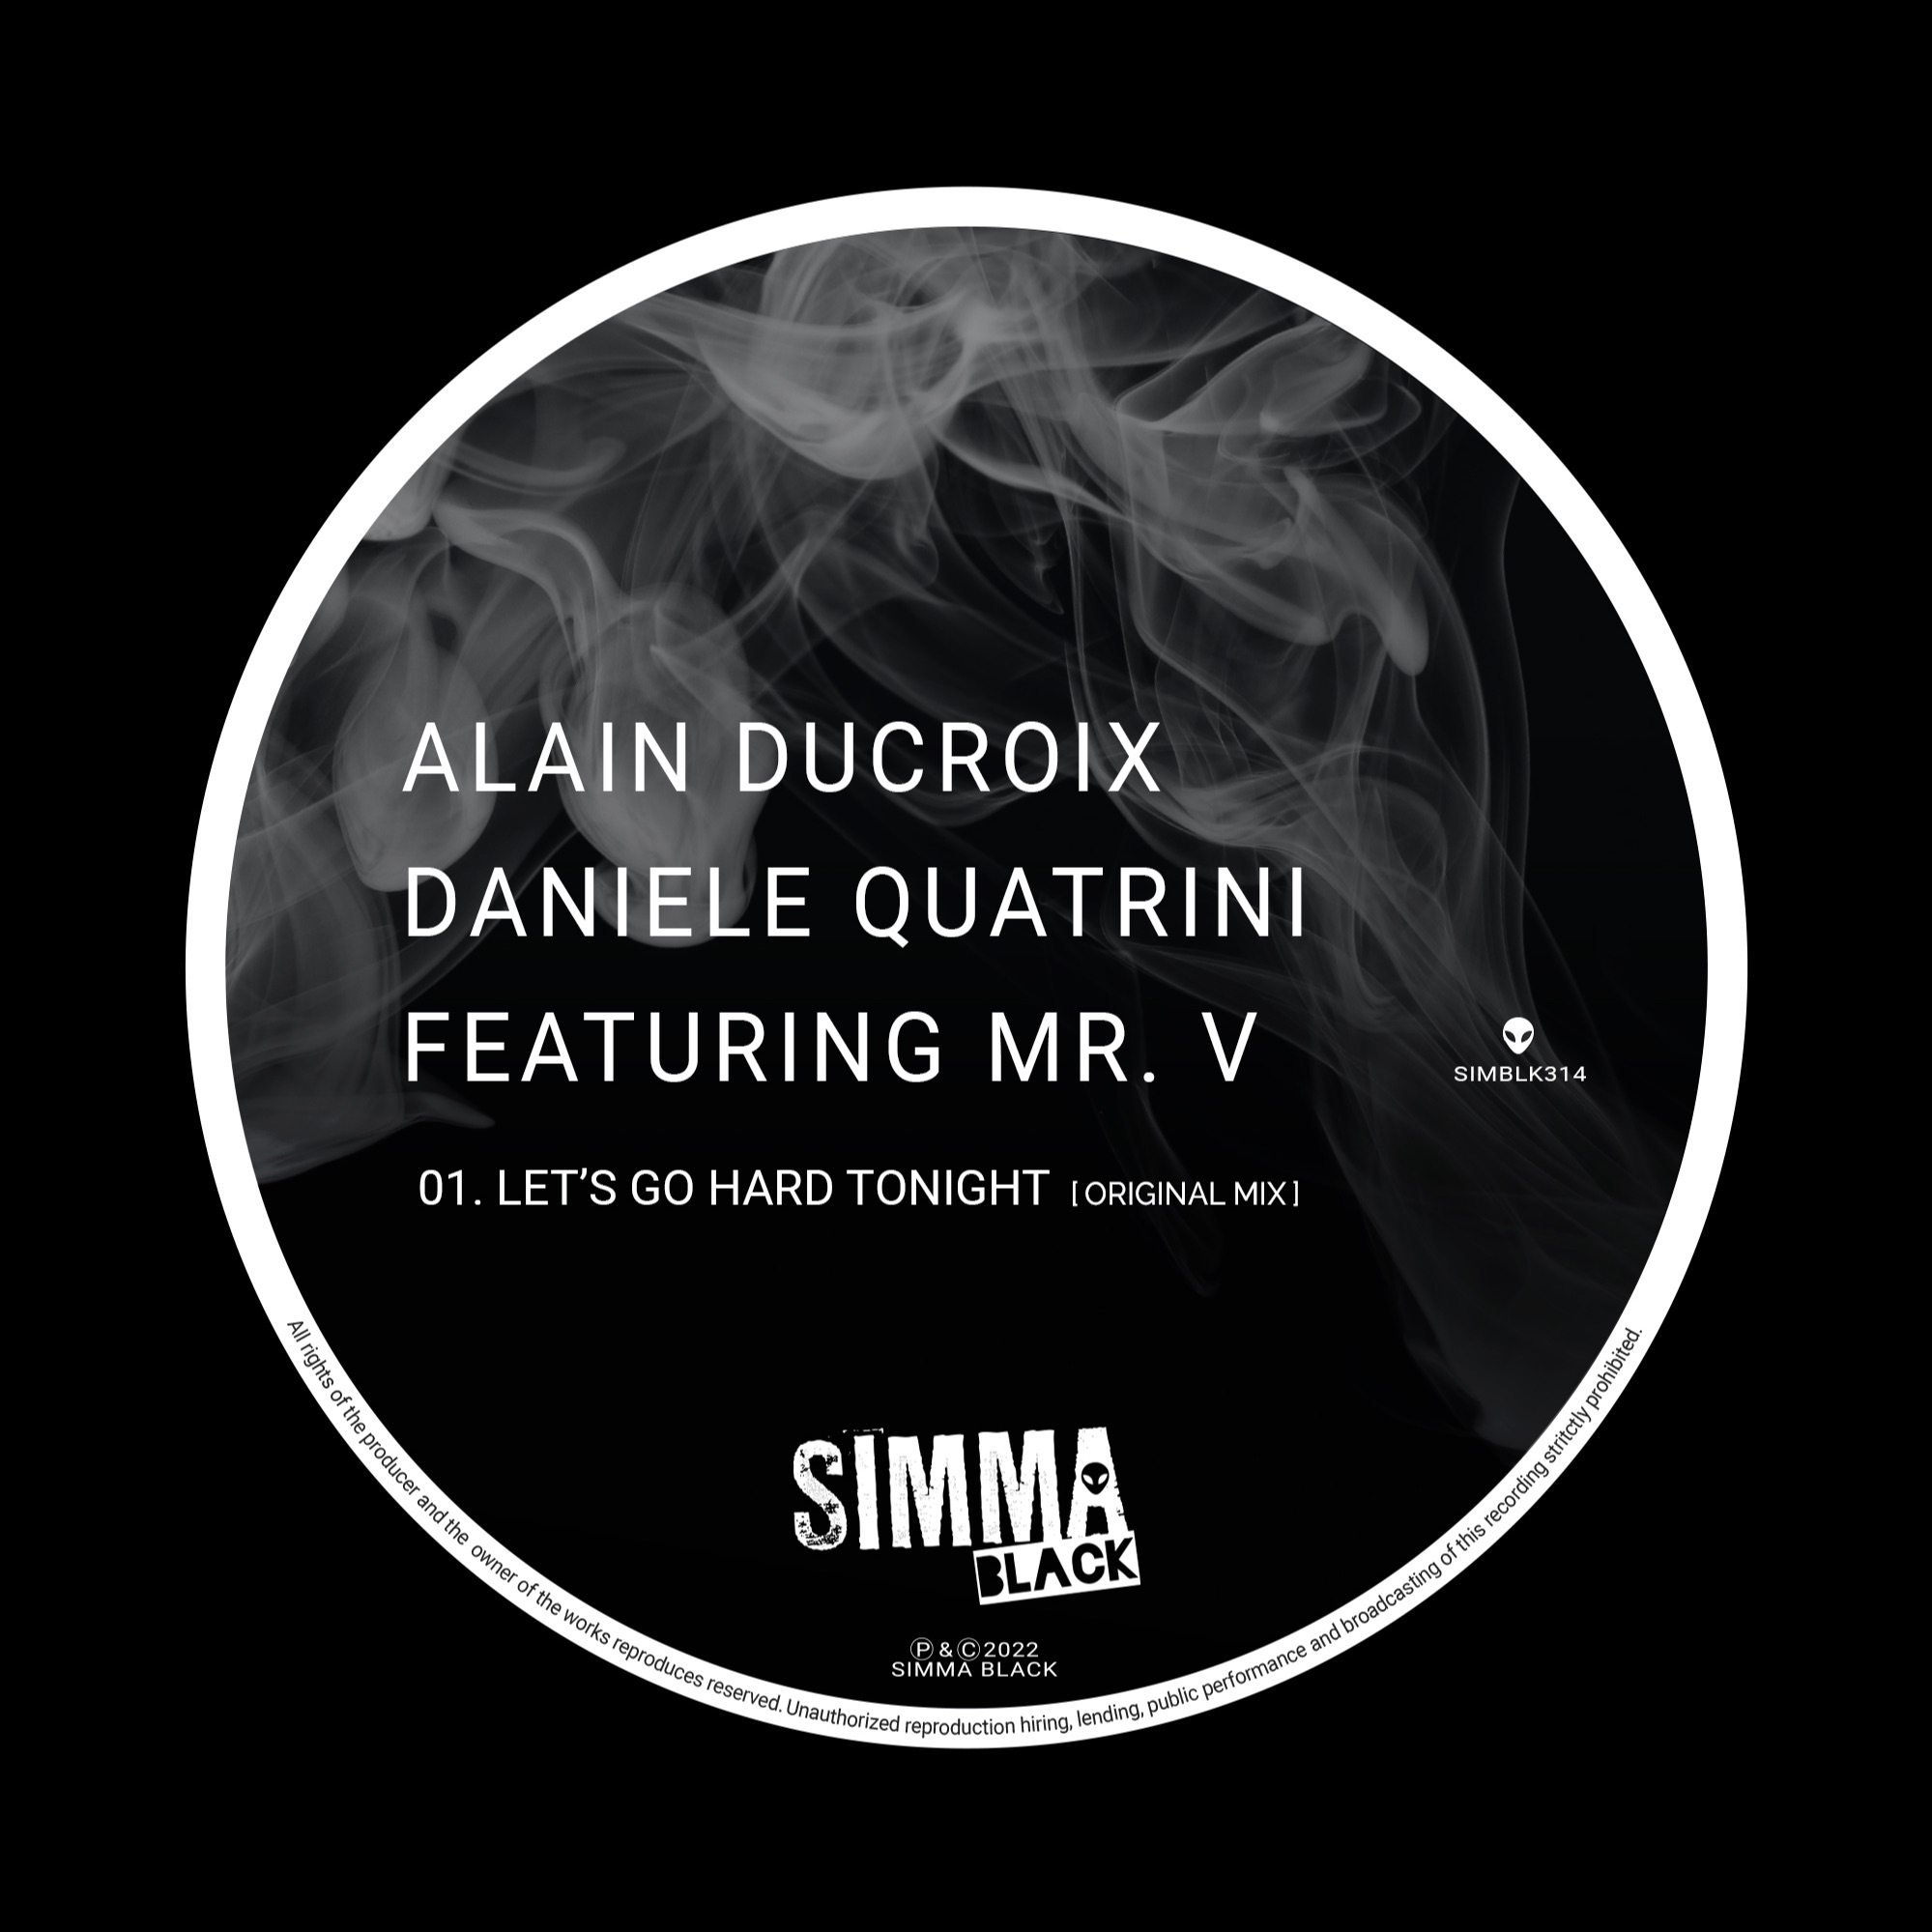 Sii mai SIMBLK314 | Alain Ducroix, Daniele Quatrini Featuring Mr. V - Let's Go Hard Tonight (Original Mix)